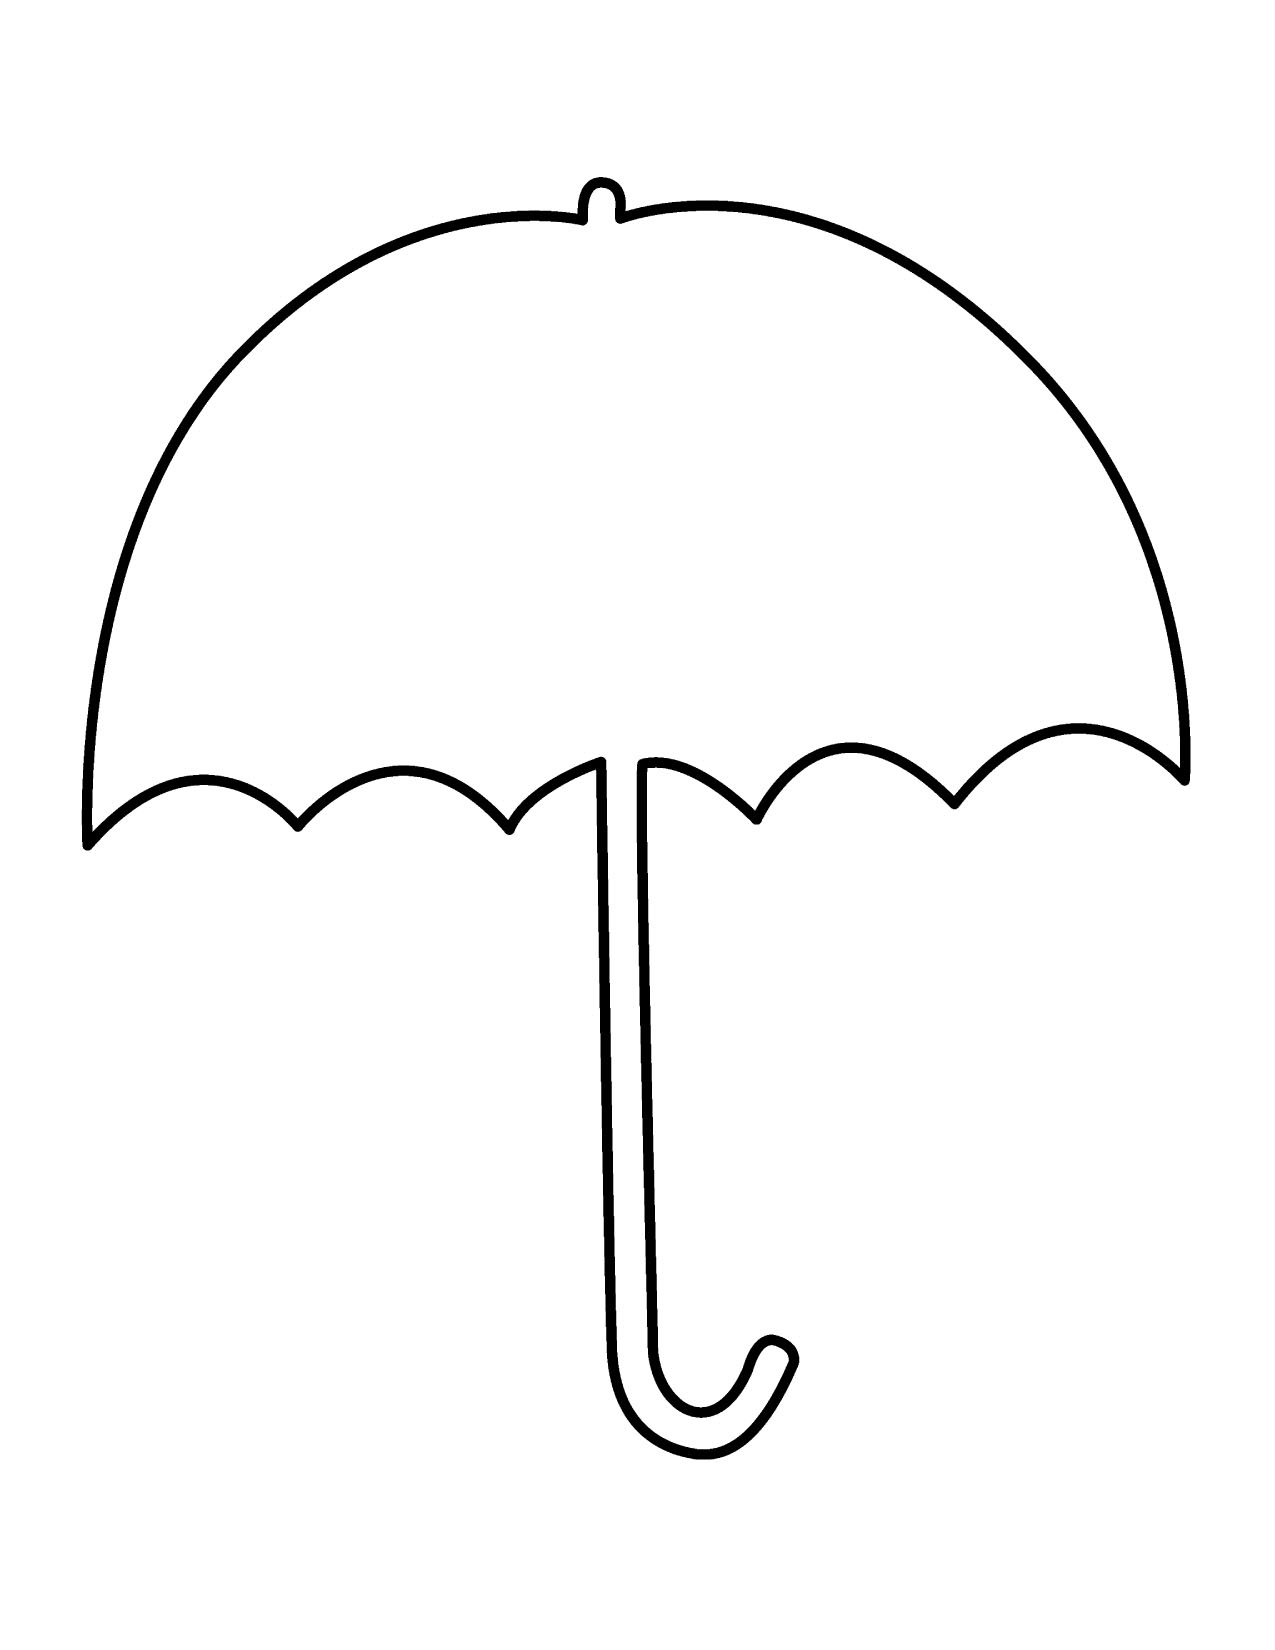 Umbrella Download Images Image Png Clipart